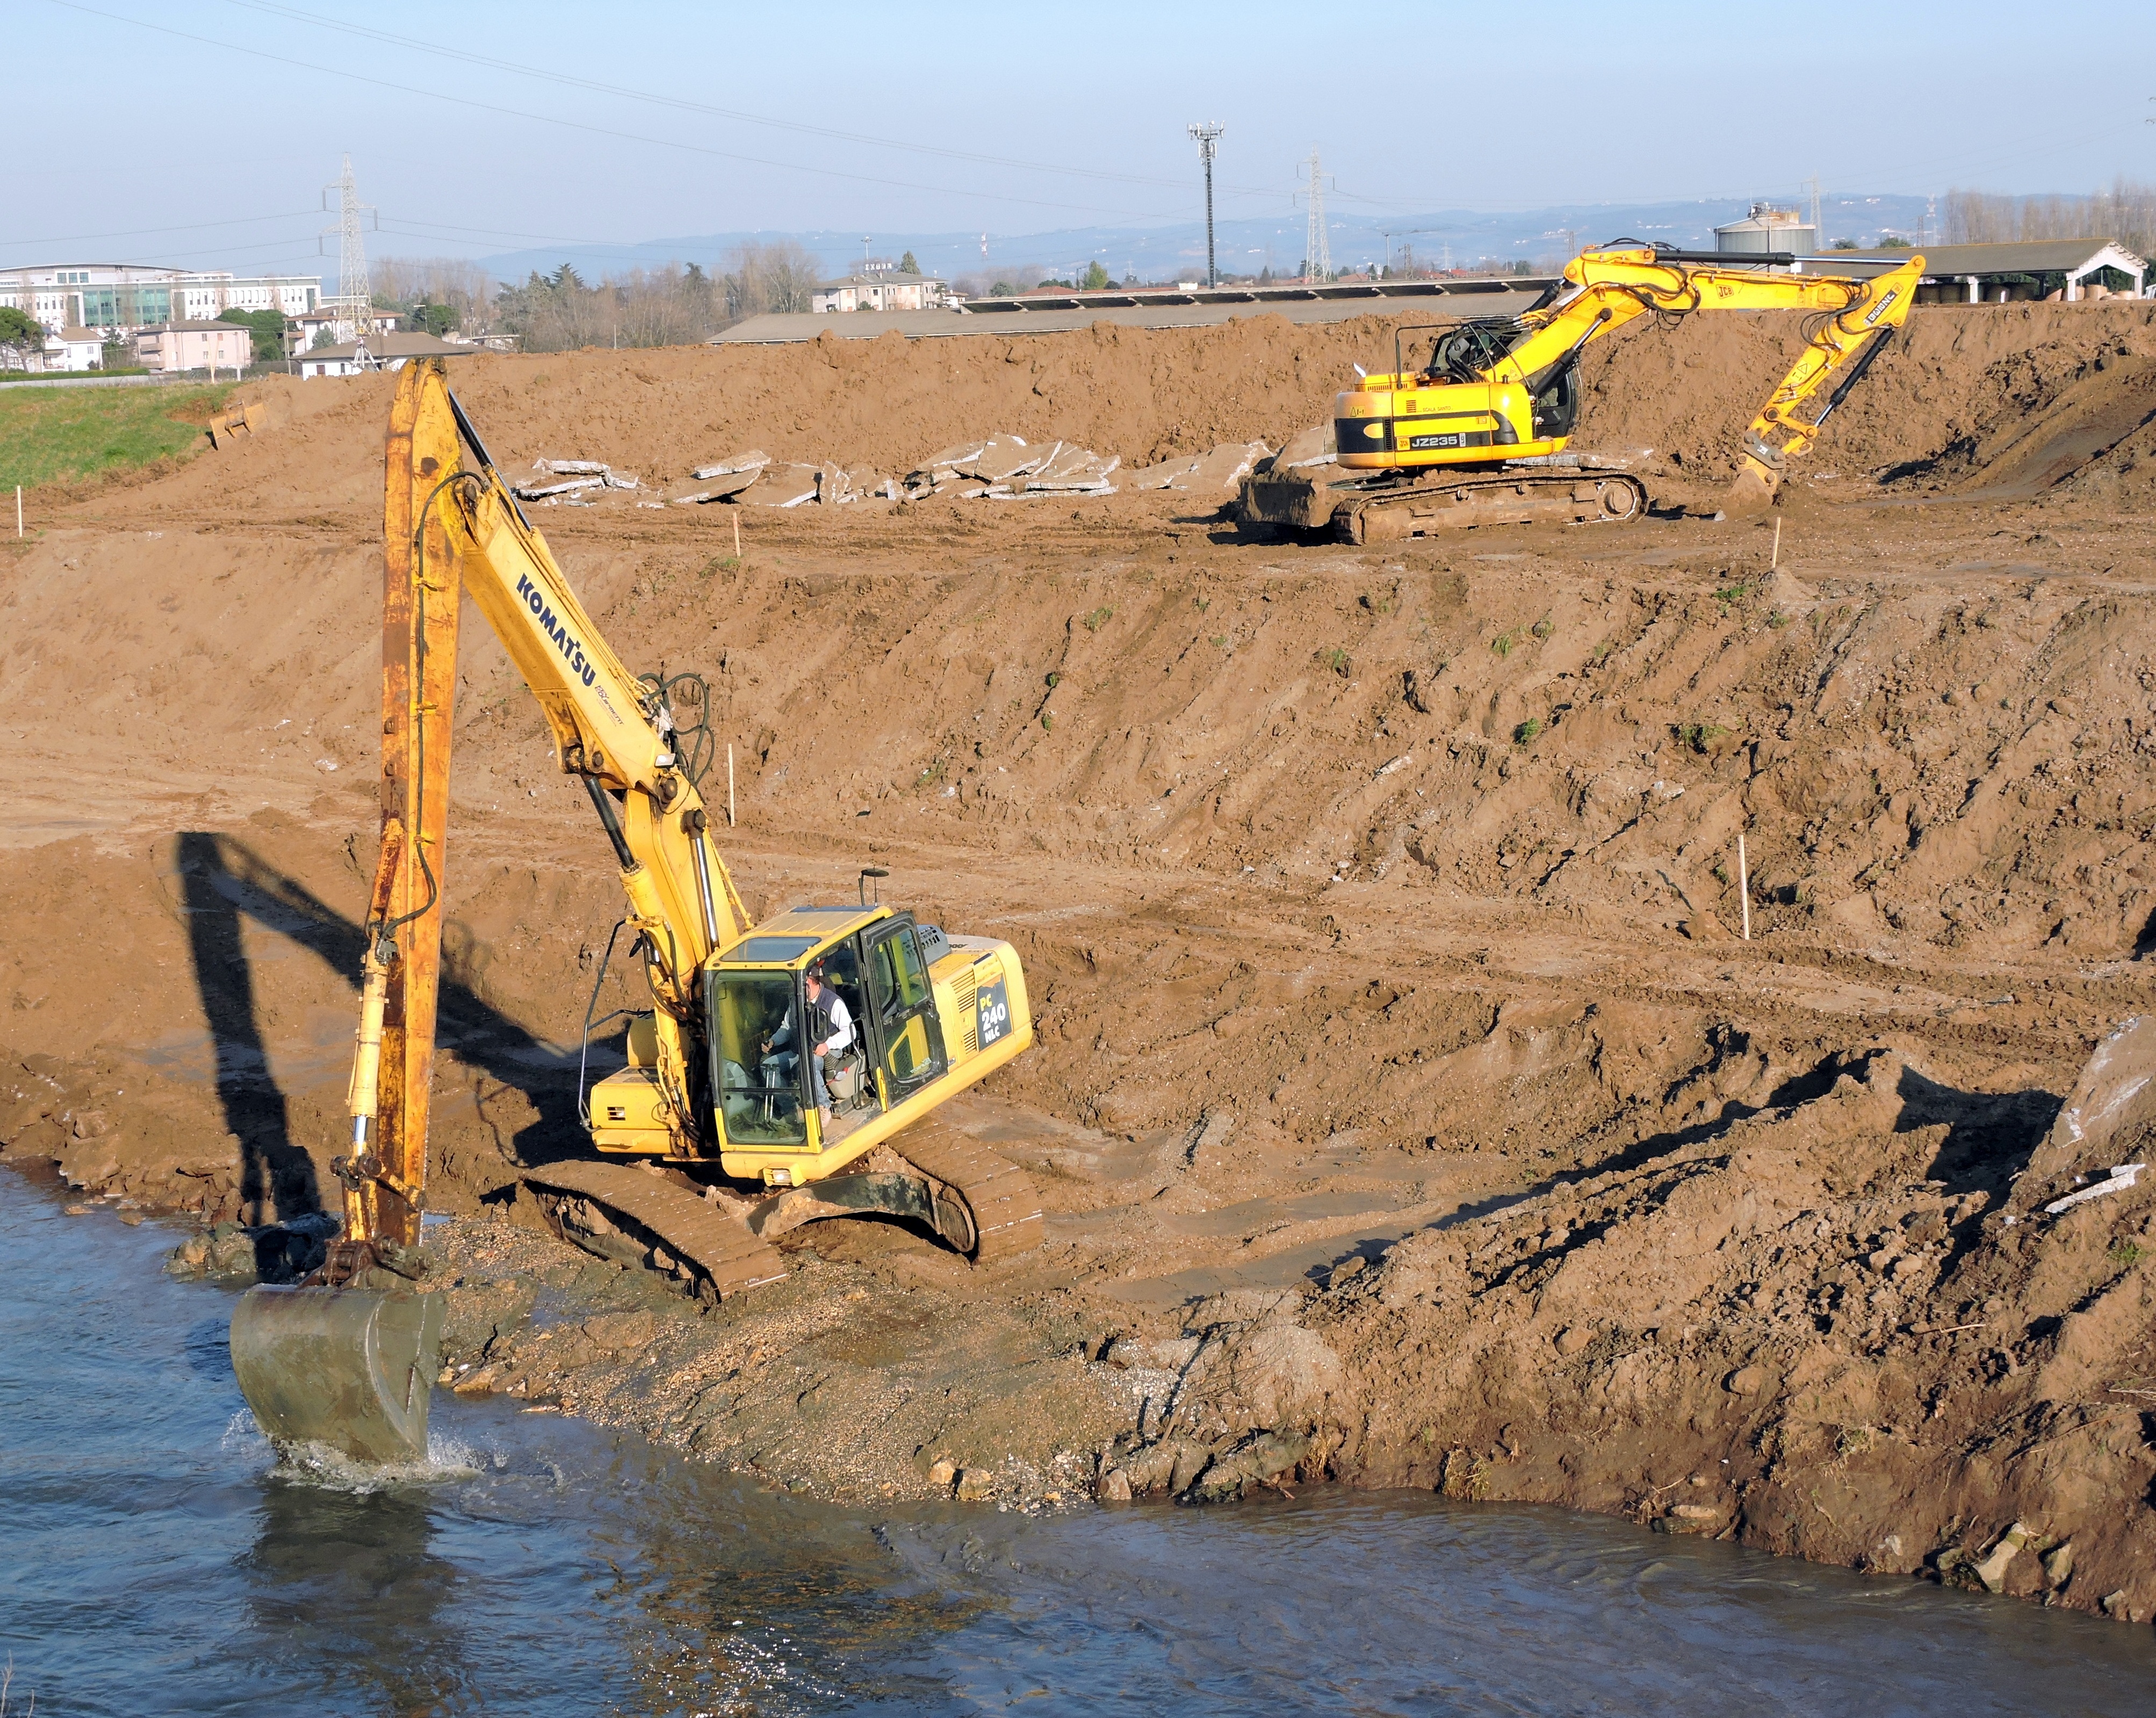 work-sand-river-asphalt-construction-vehicle-soil-italy-material-earth-torrent-excavator-levee-quarry-excavation-construction-equipment-san-bonifacio-756840